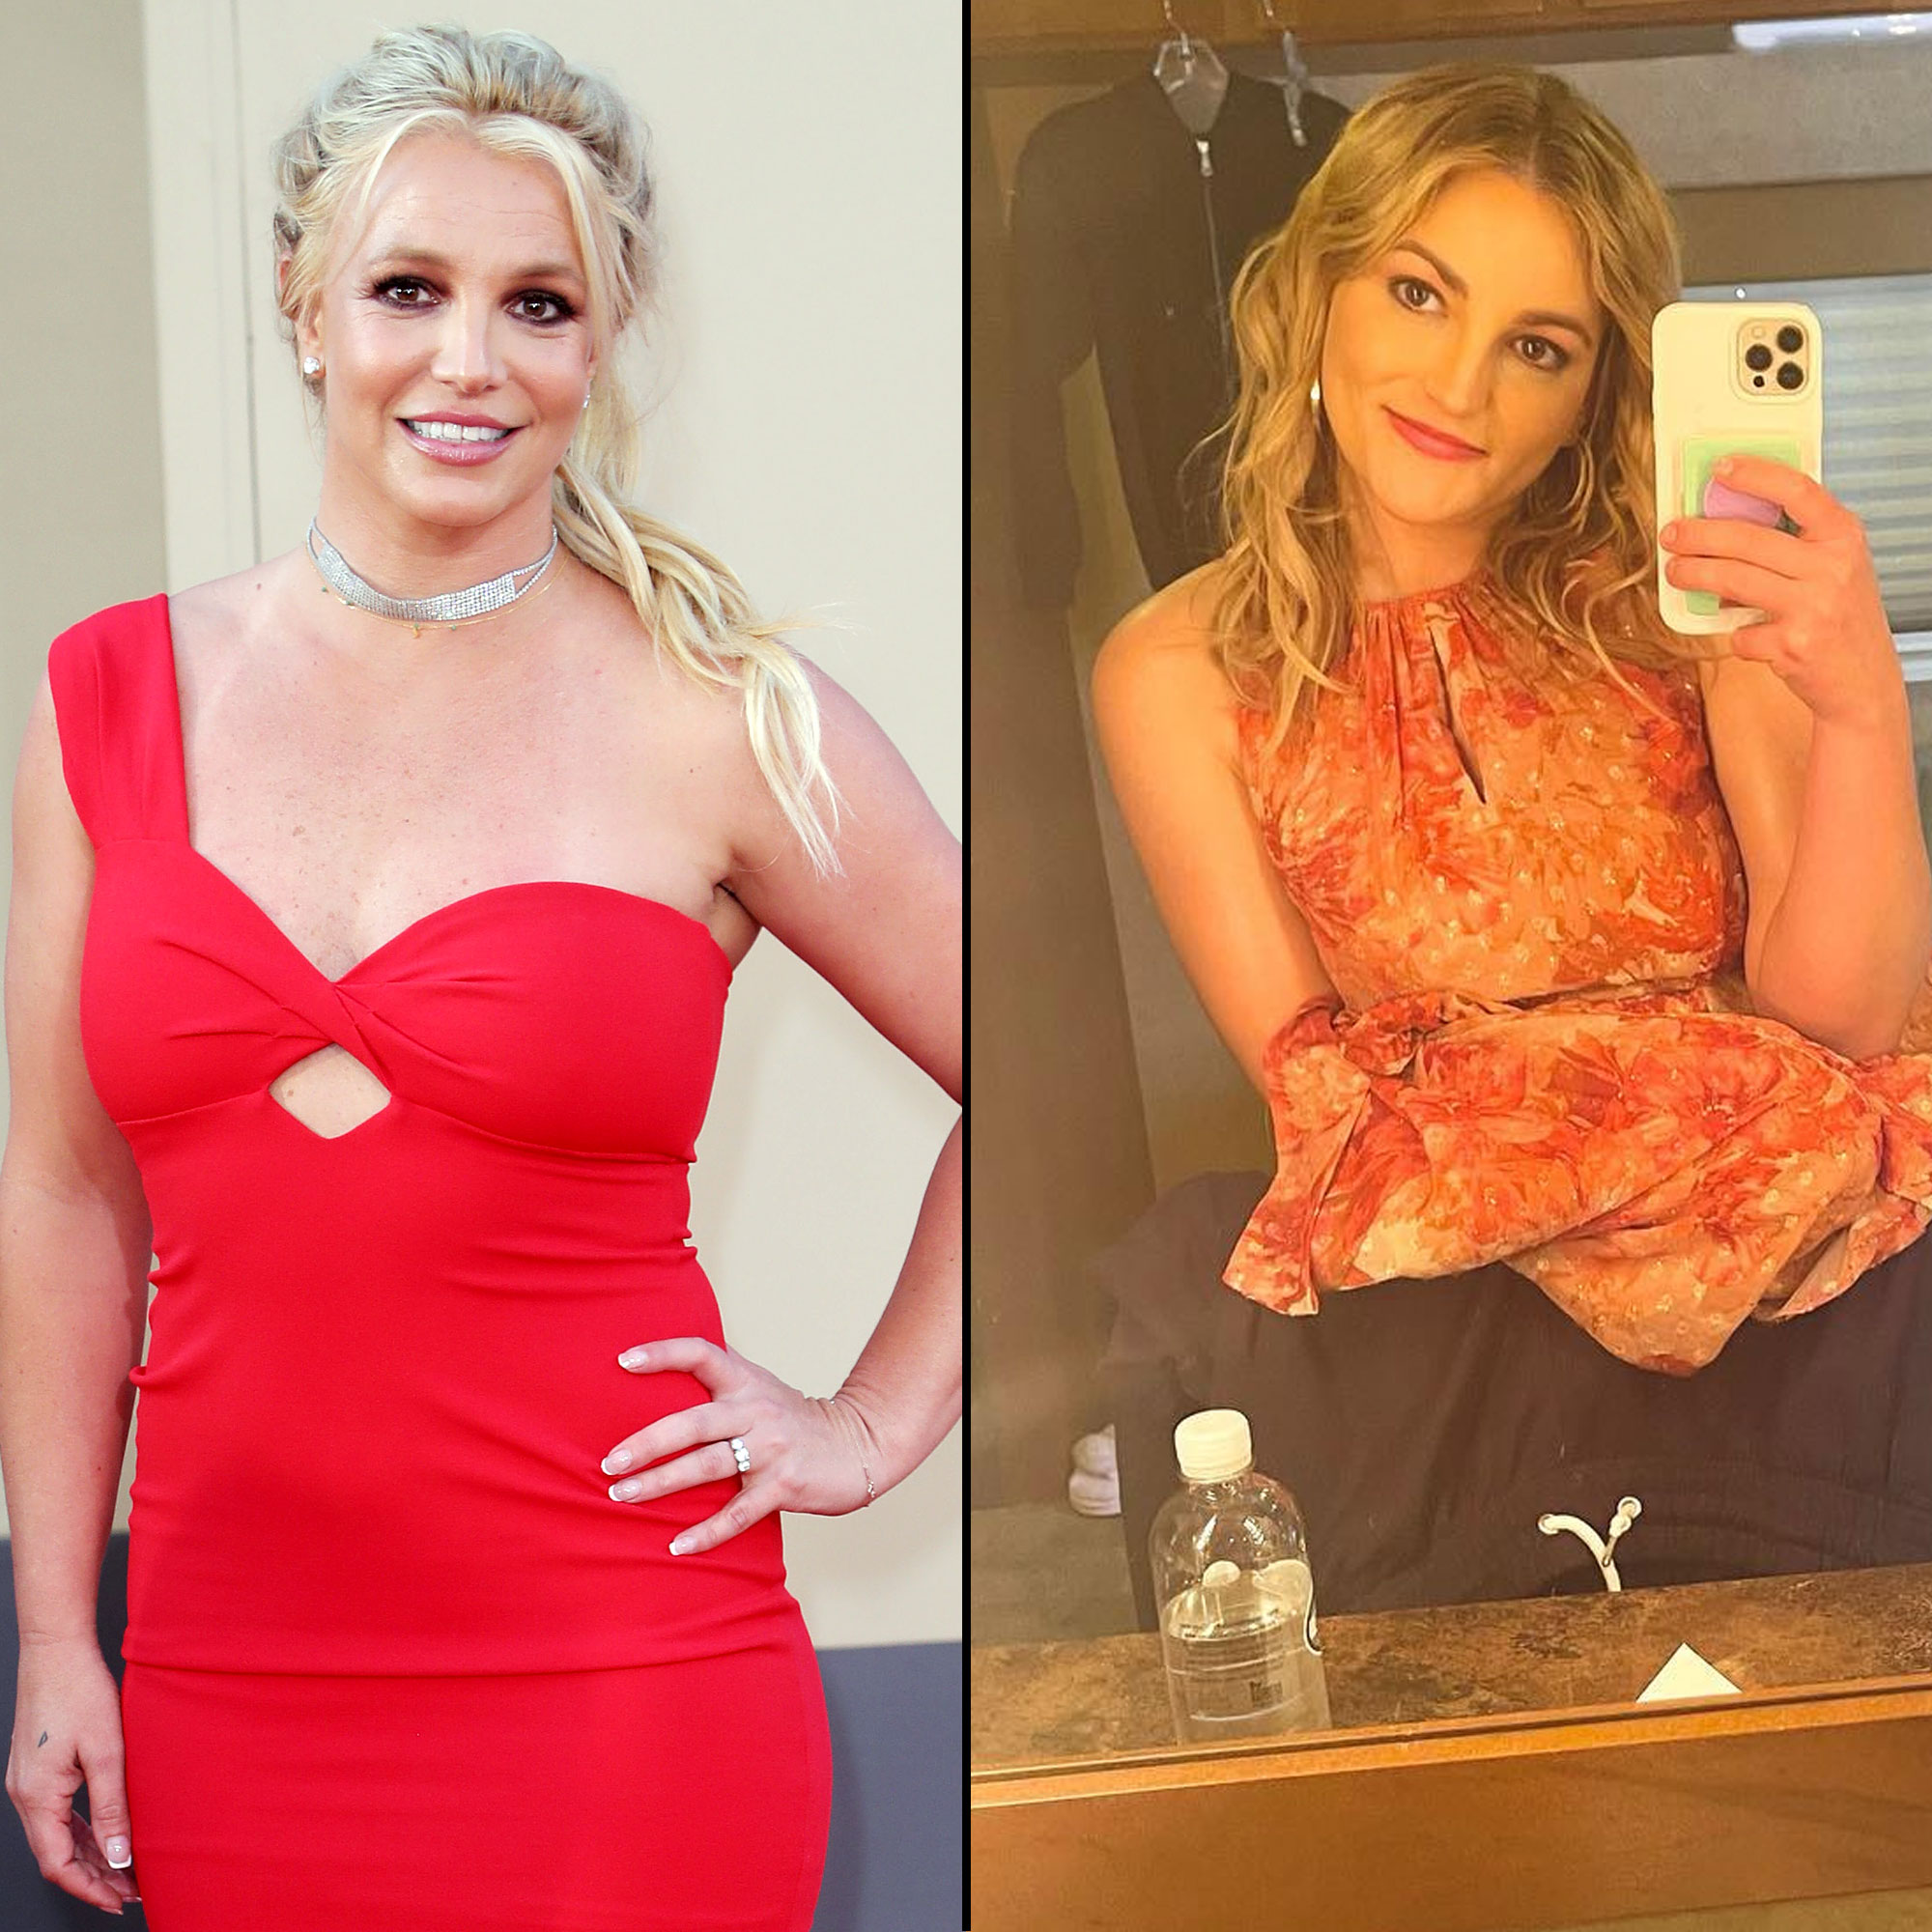 Jamie Lynn Spears Anal Porn - Britney Spears, Jamie Lynn Spears' Ups and Downs: A Timeline of Drama